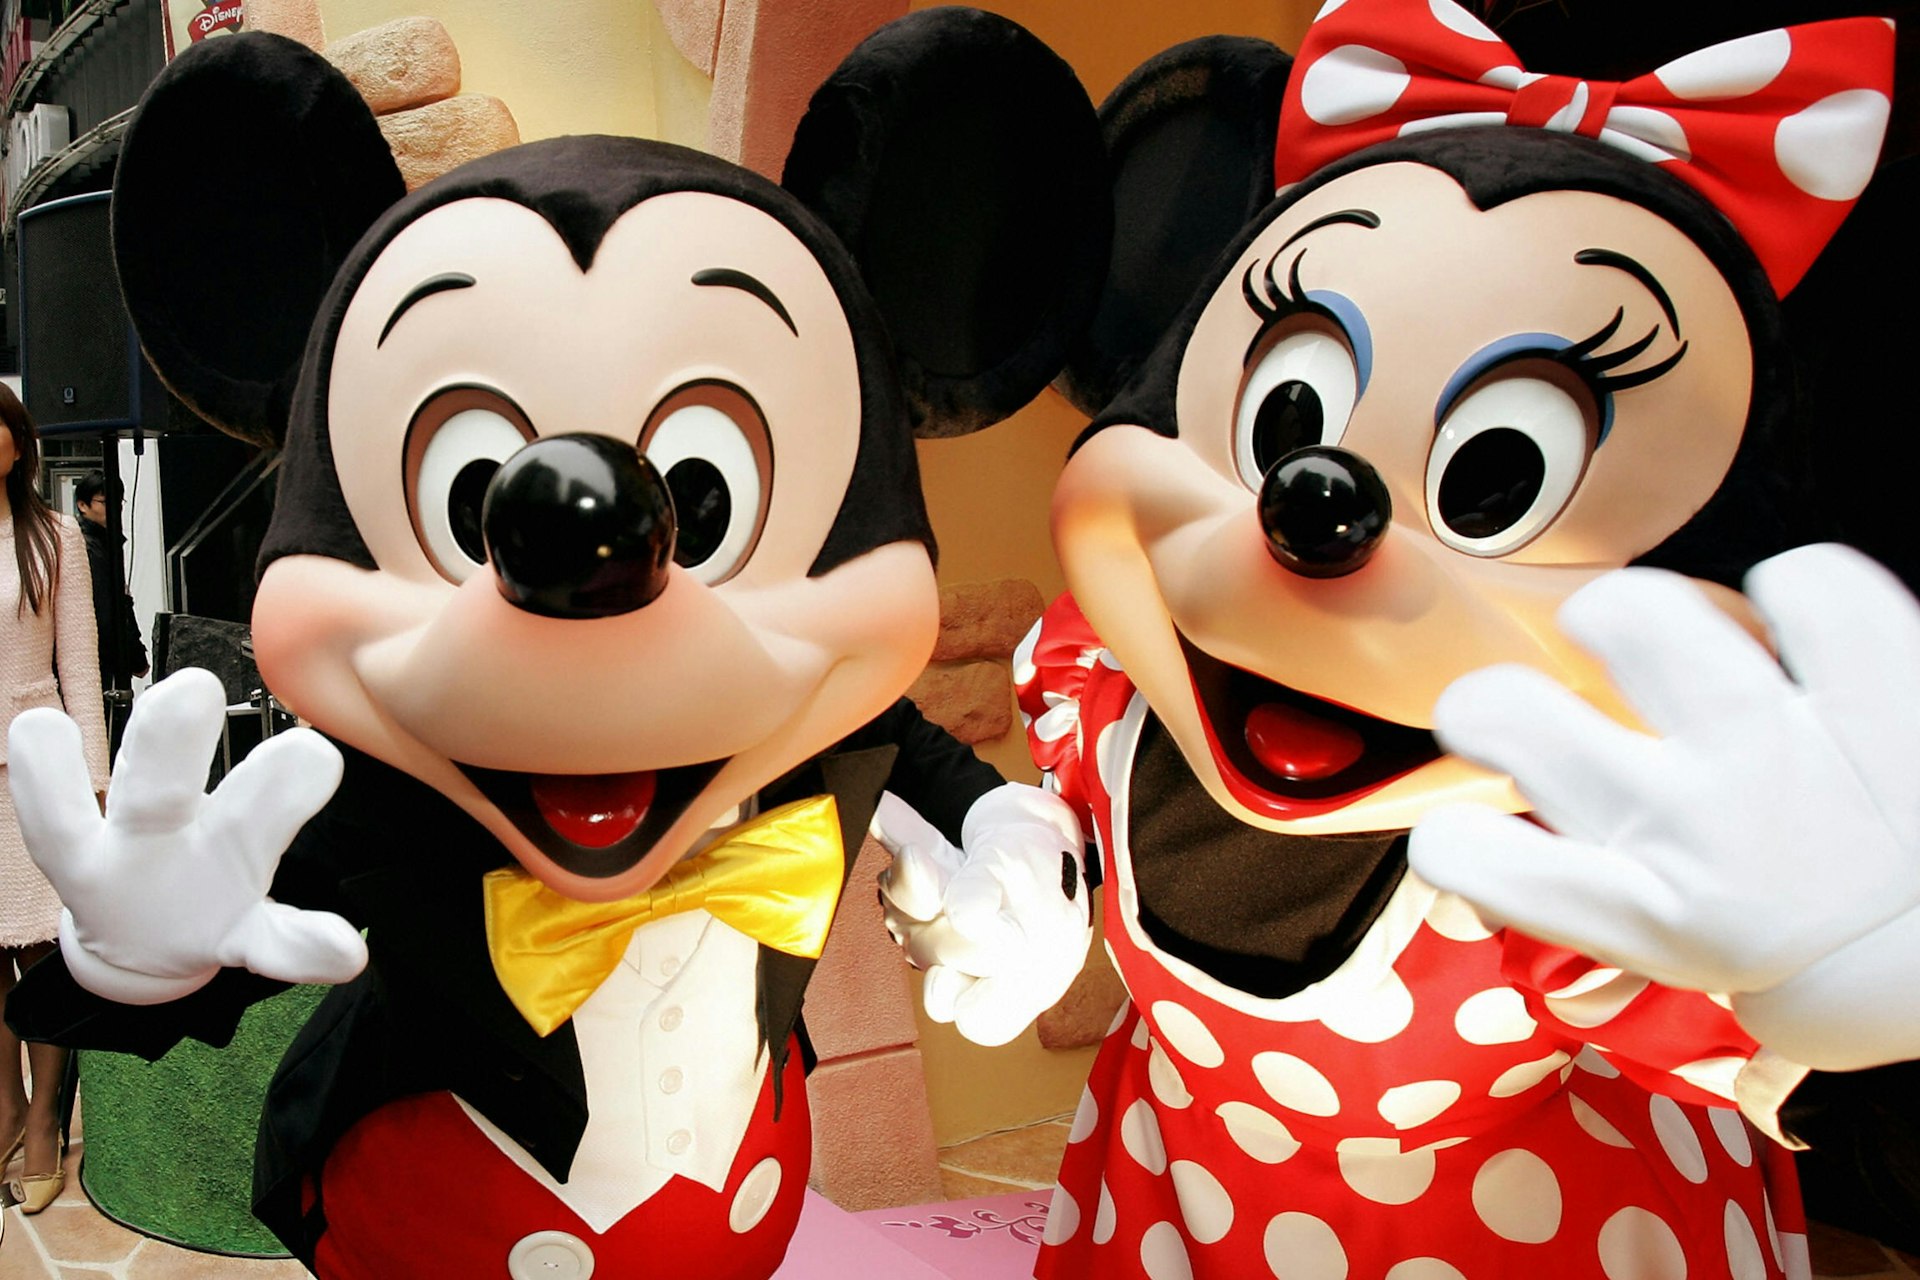 Mickey and Minnie waving at the camera